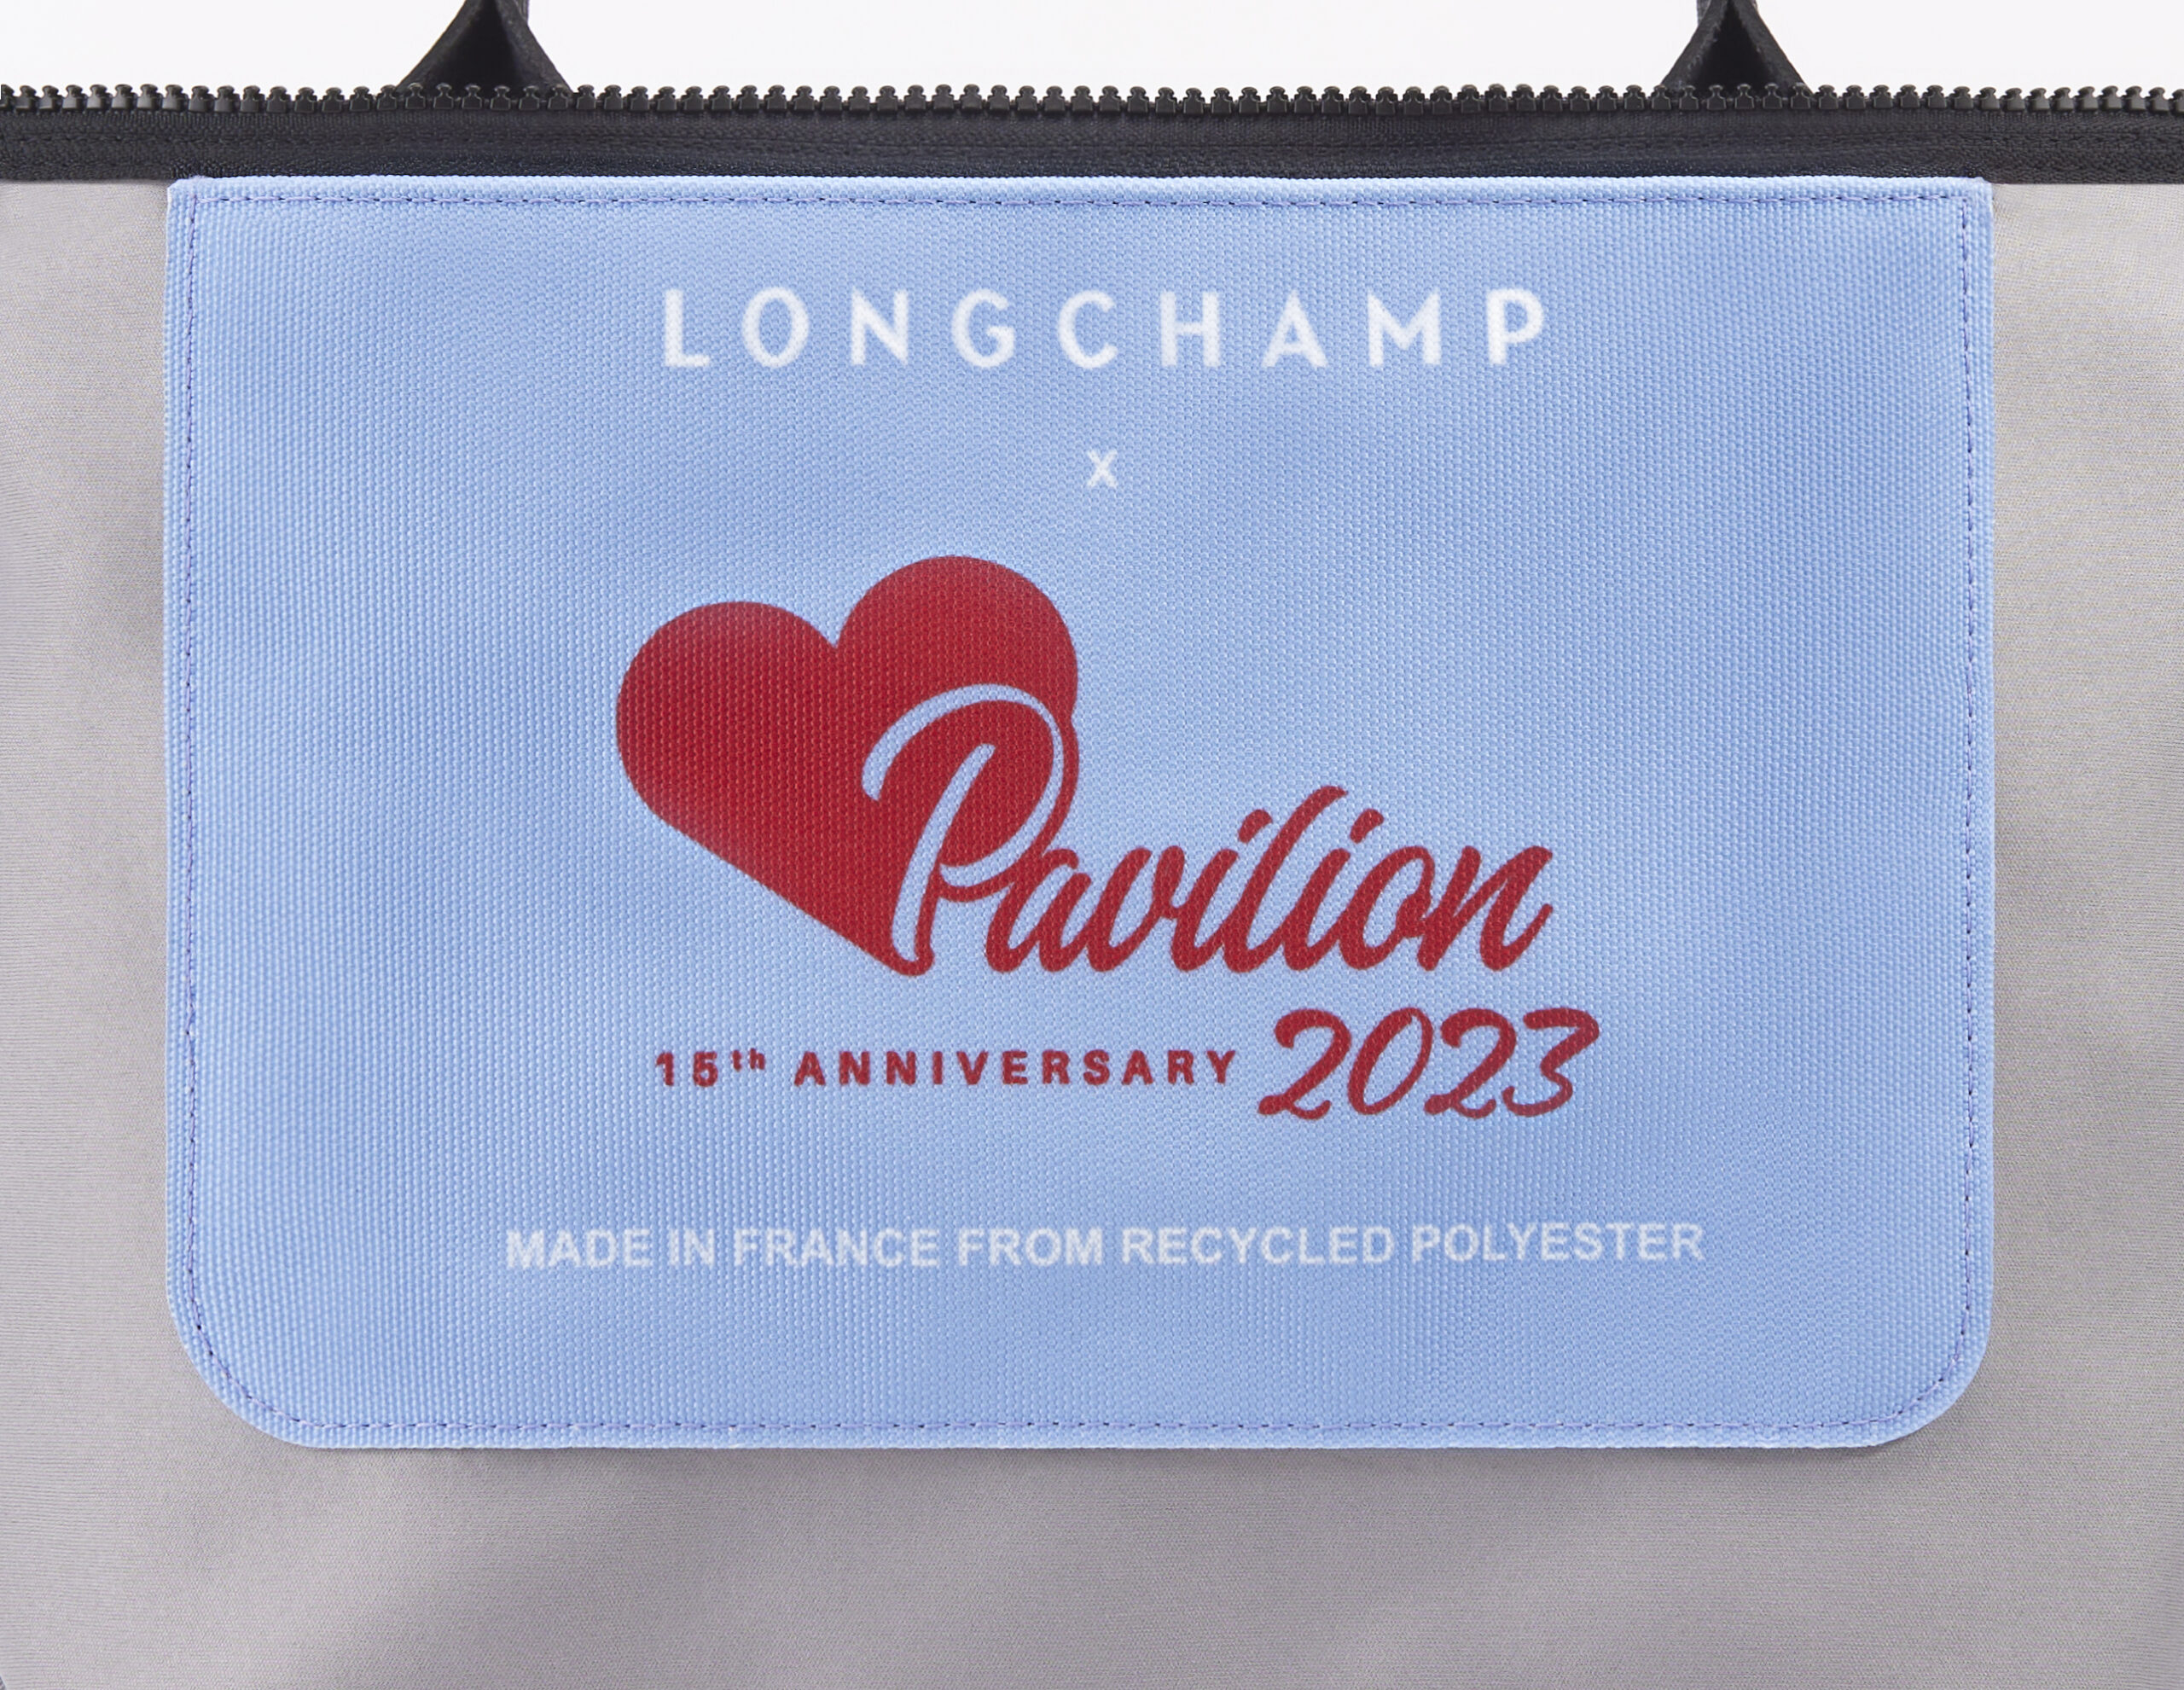 Pavilion KL Celebrates 15th Anniversary with a Pavilion KL X Longchamp Bag  - Life News Agency